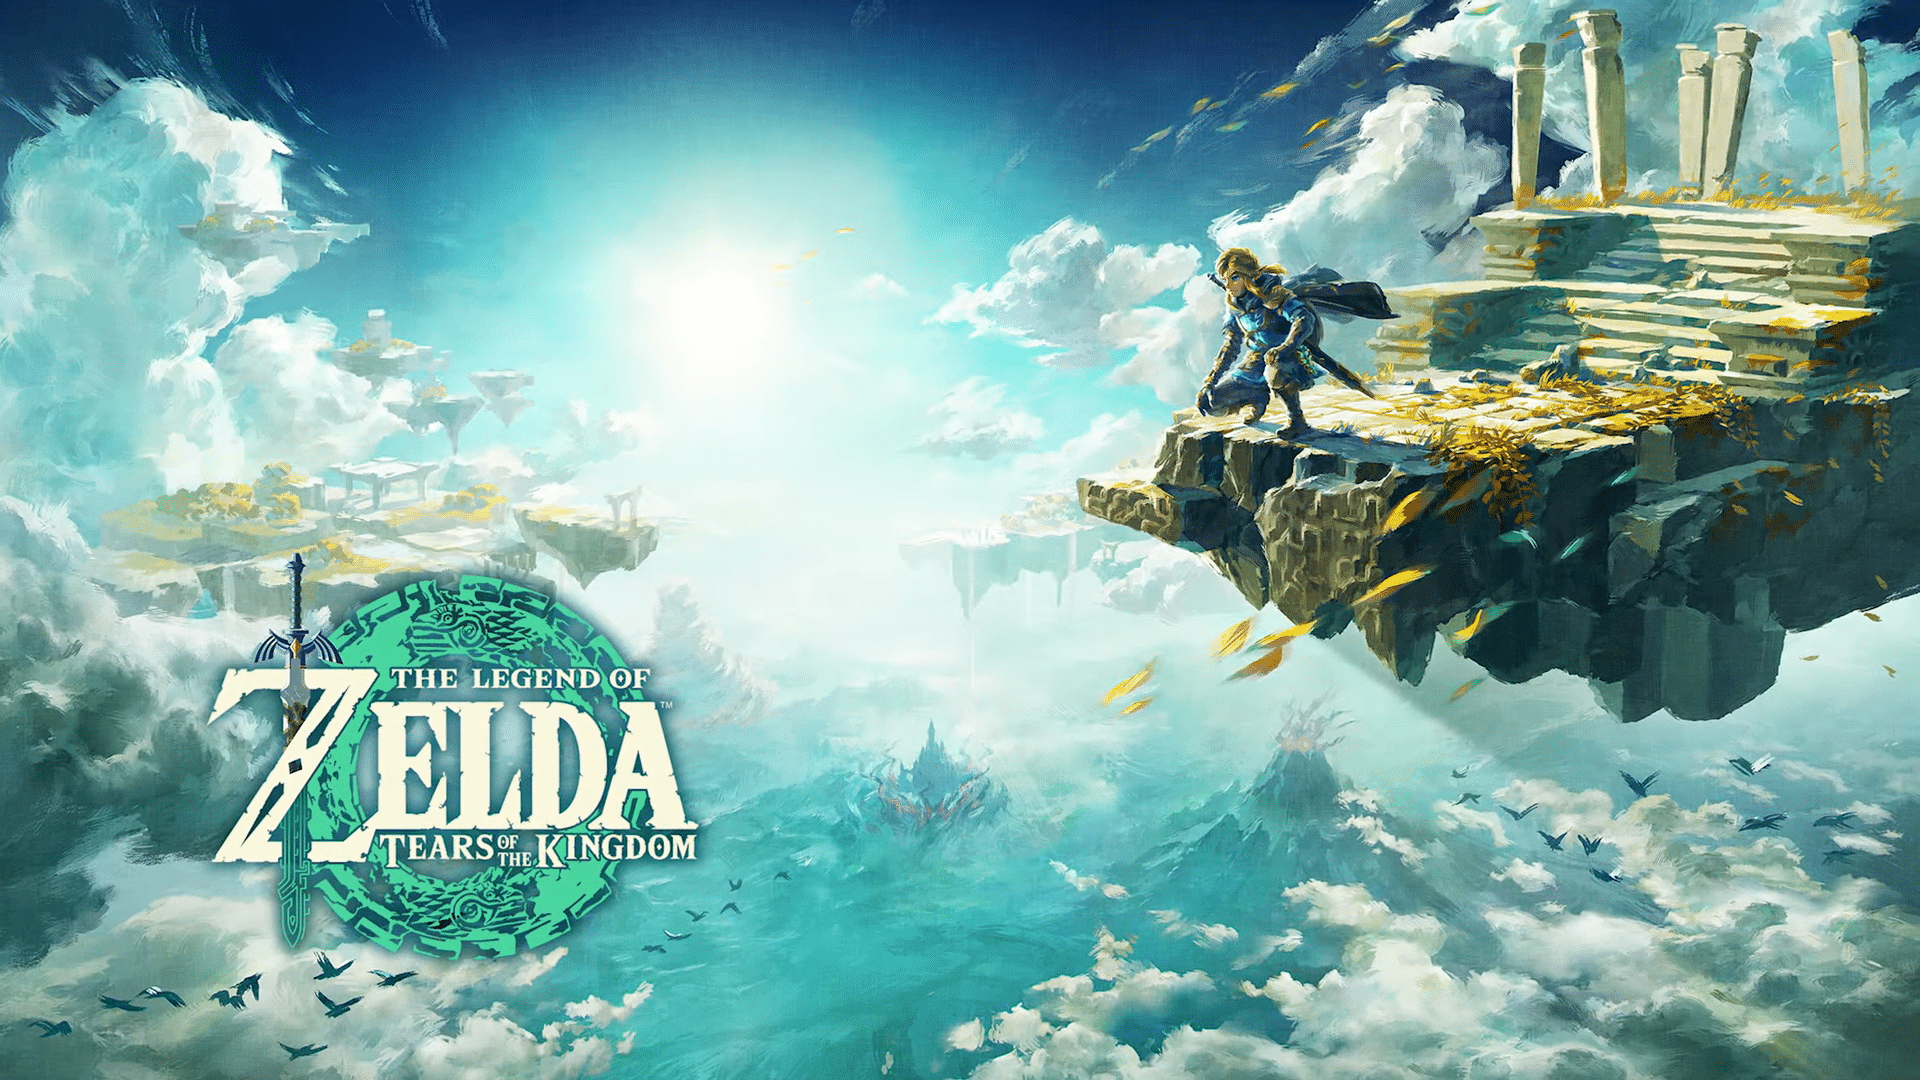 The Legend of Zelda: Tears of the Kingdom Sells 10 Million Units in 3 Days; Fastest-Selling Zelda Game Ever